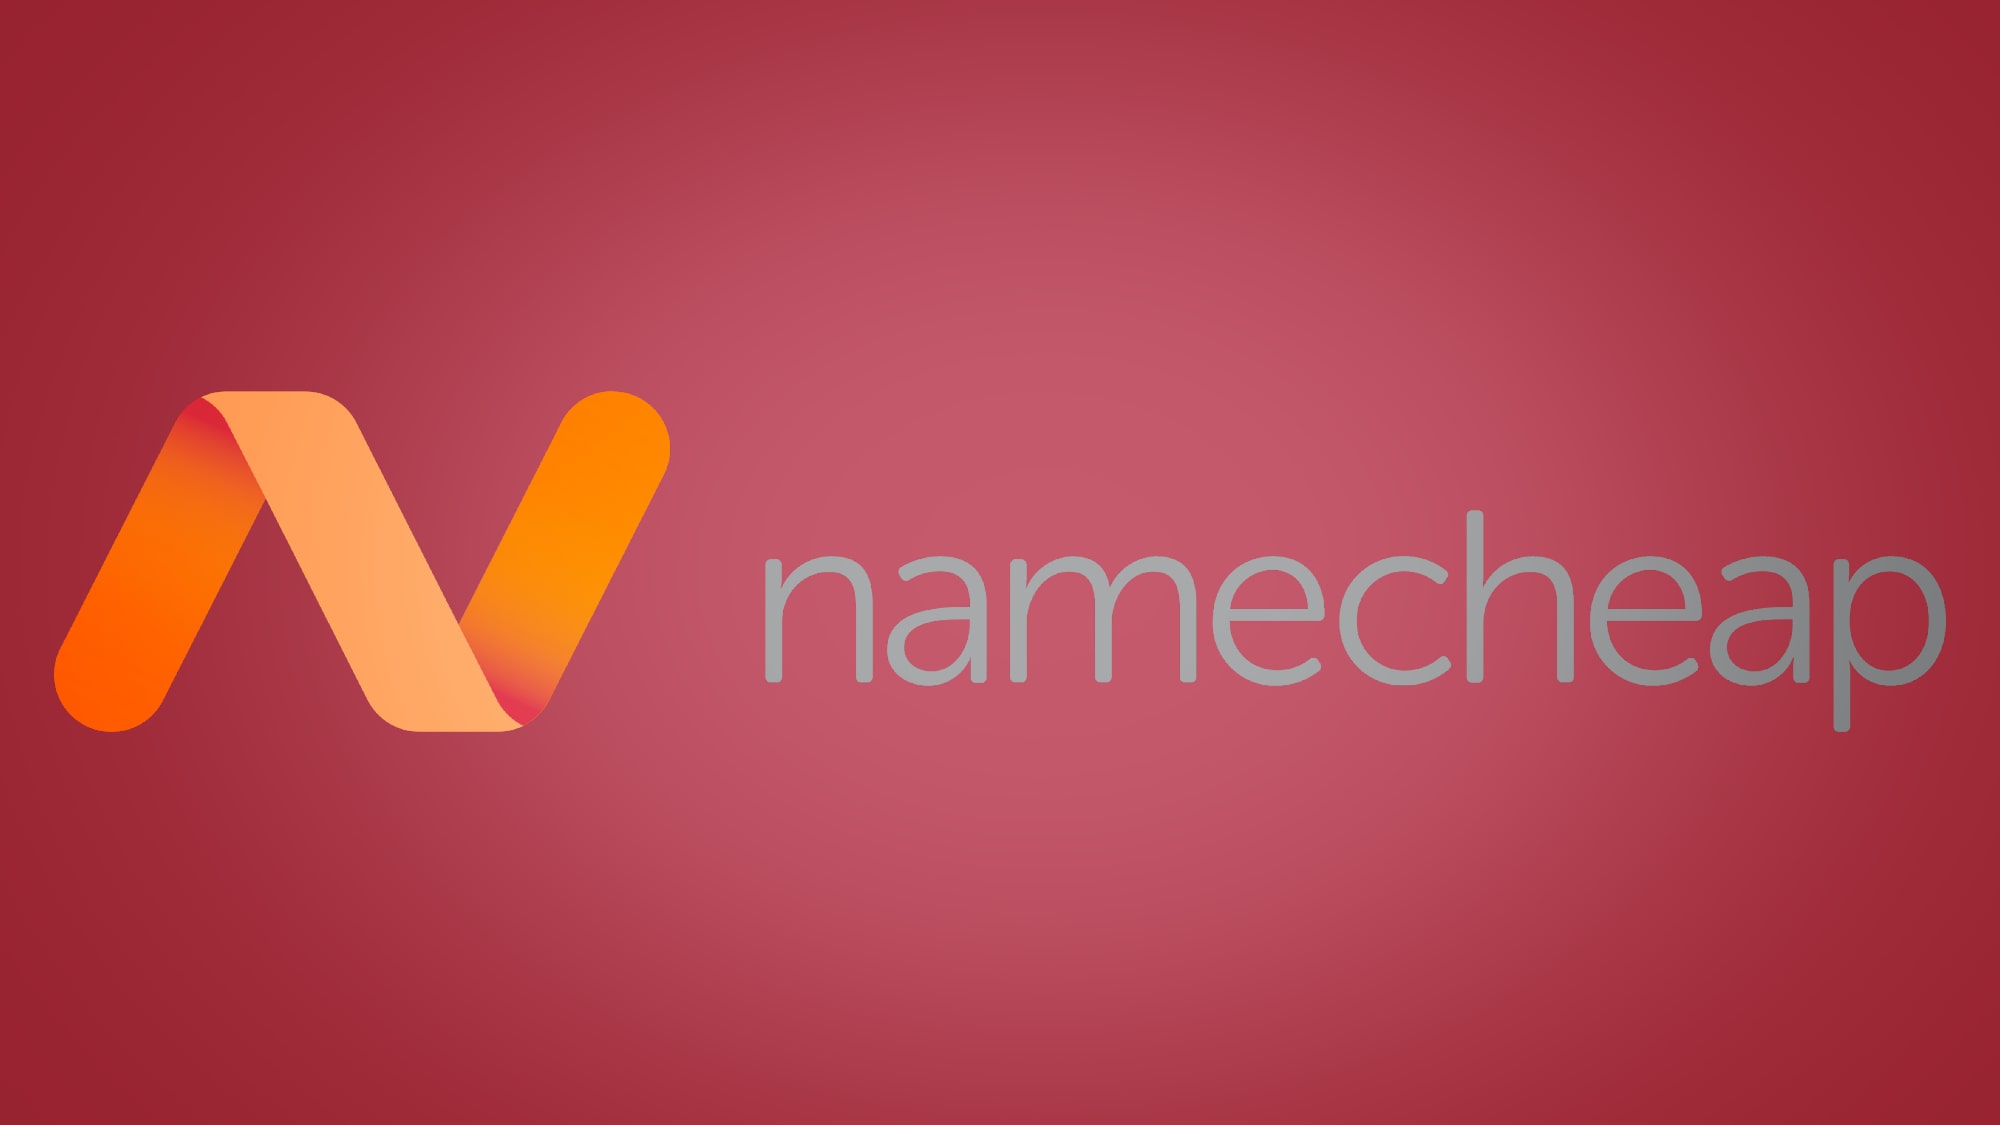 Namecheap logo on burgundy background